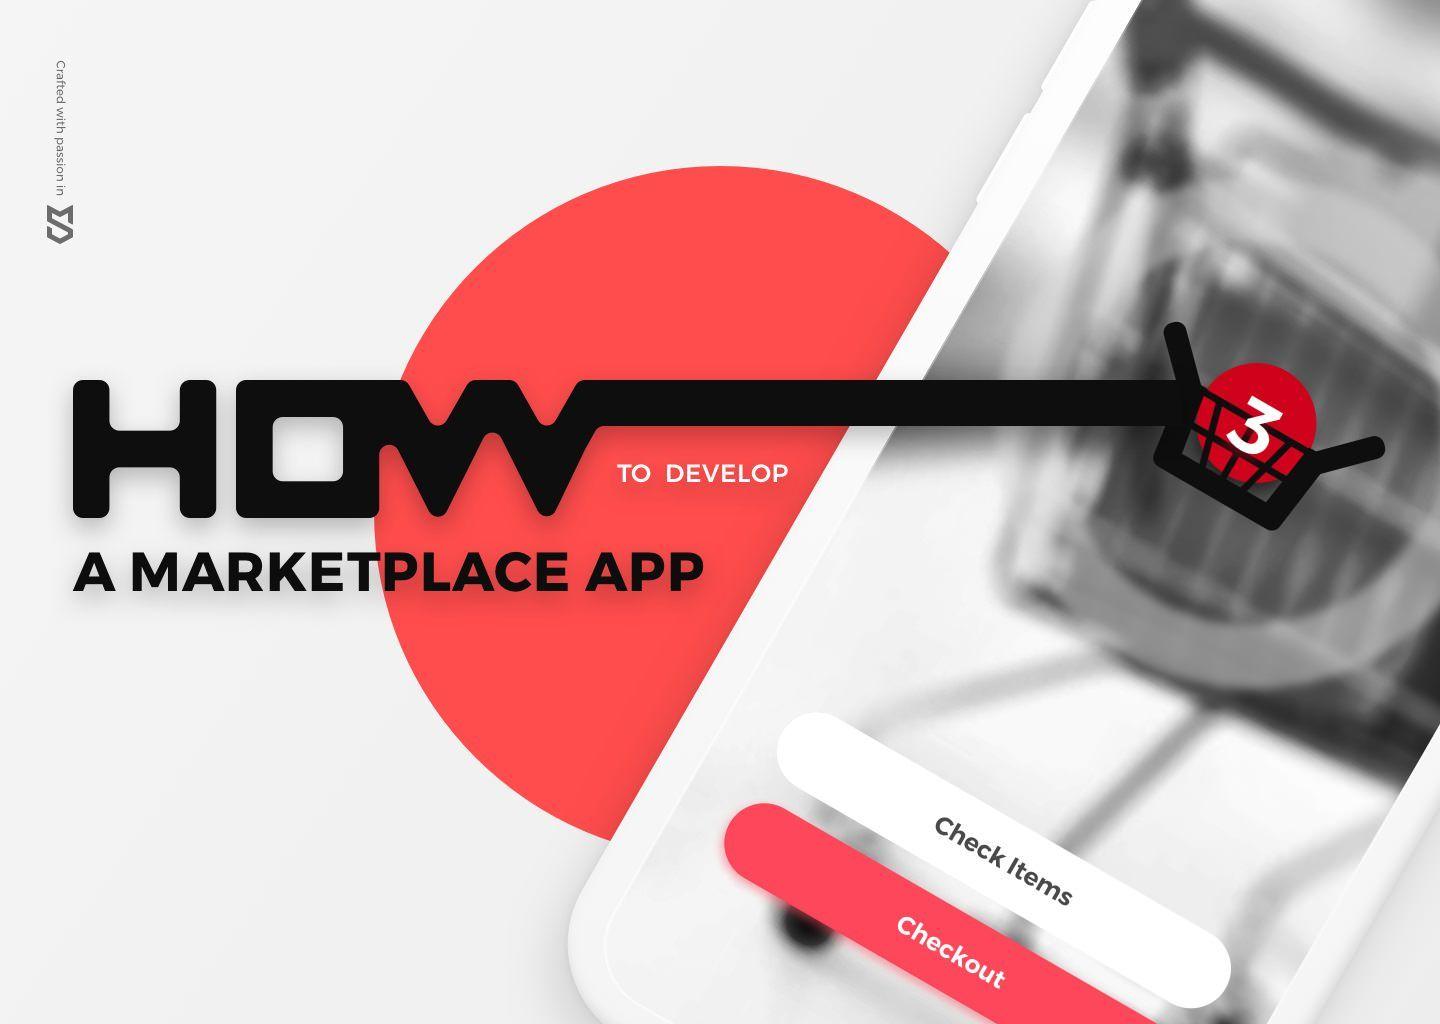 Letgo App Logo - How to Make a Marketplace App Like Letgo? - Mind Studios